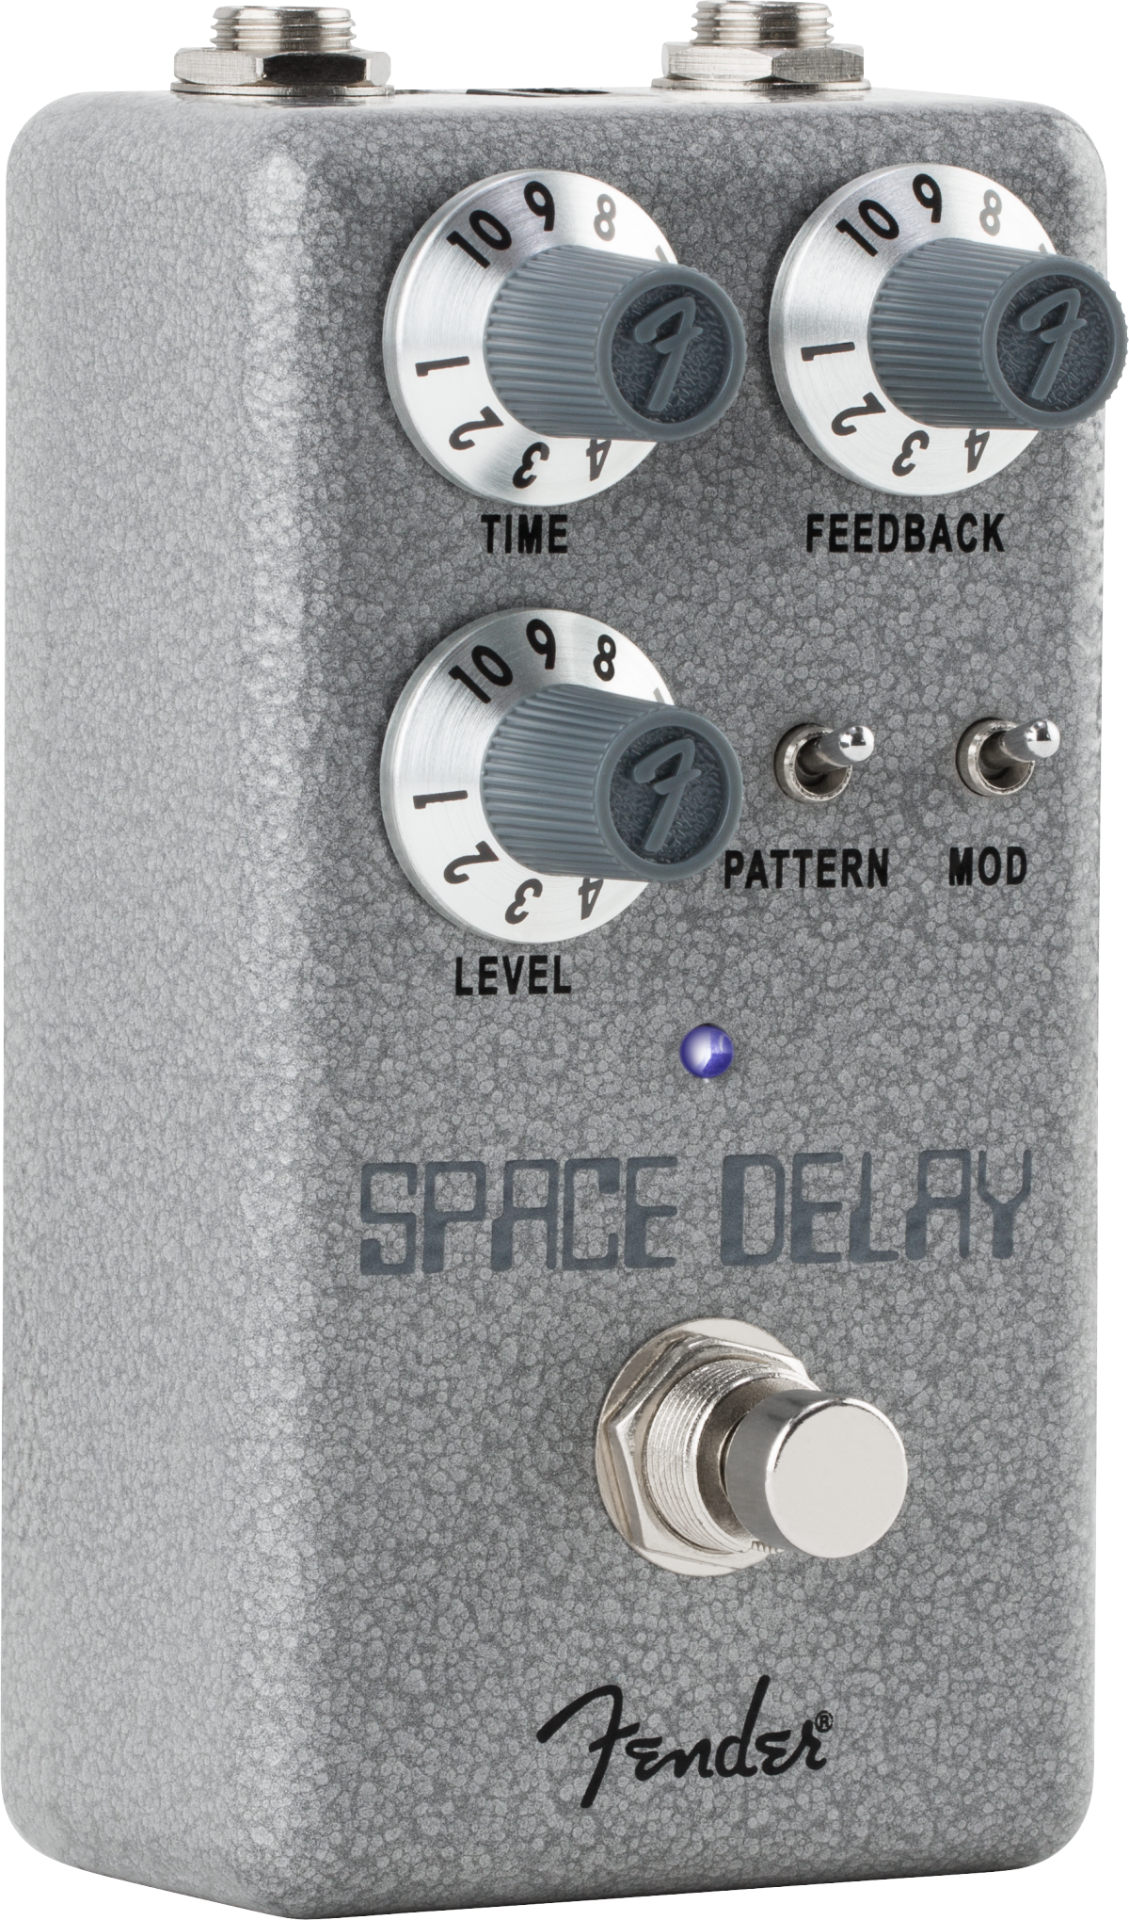 Fender Hammertone™ Space Delay Pedal